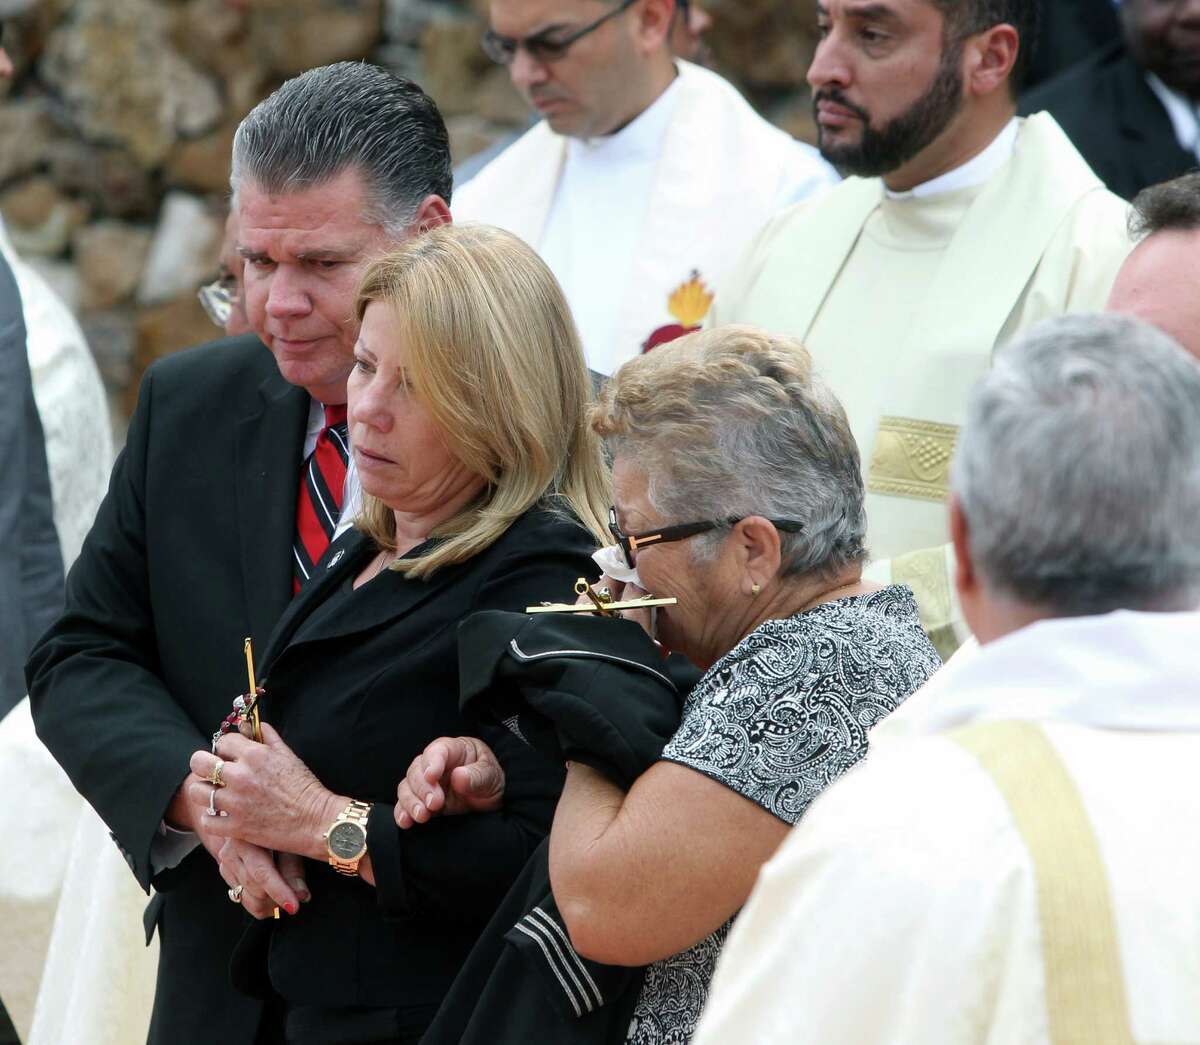 Jose Fernandez's funeral service held in Miami